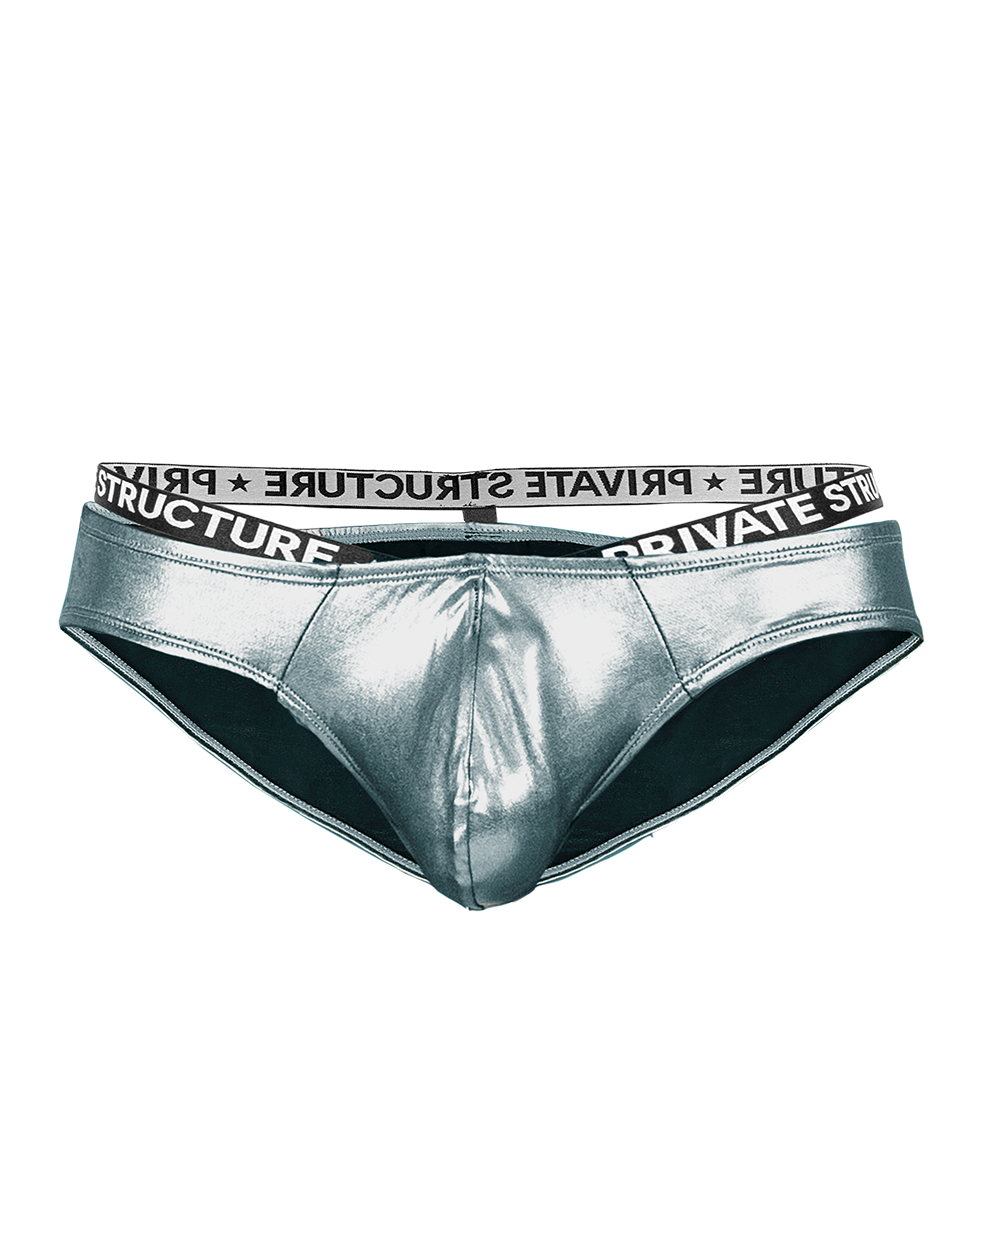 Private Structure, Stylish Men's Underwear